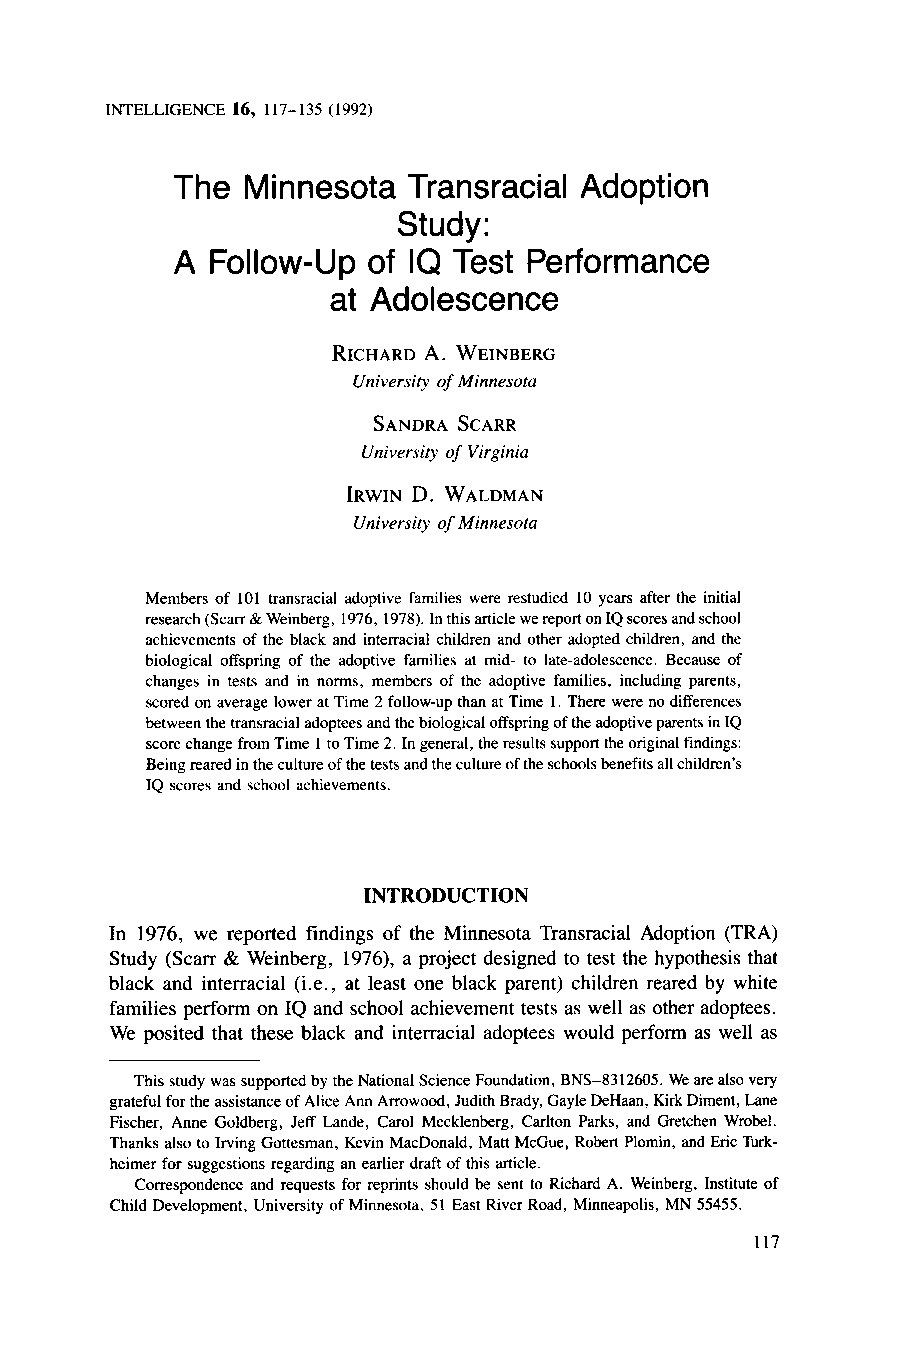 The Minnesota Transracial Adoption Study: A Follow-Up of IQ Test Performance at Adolescence